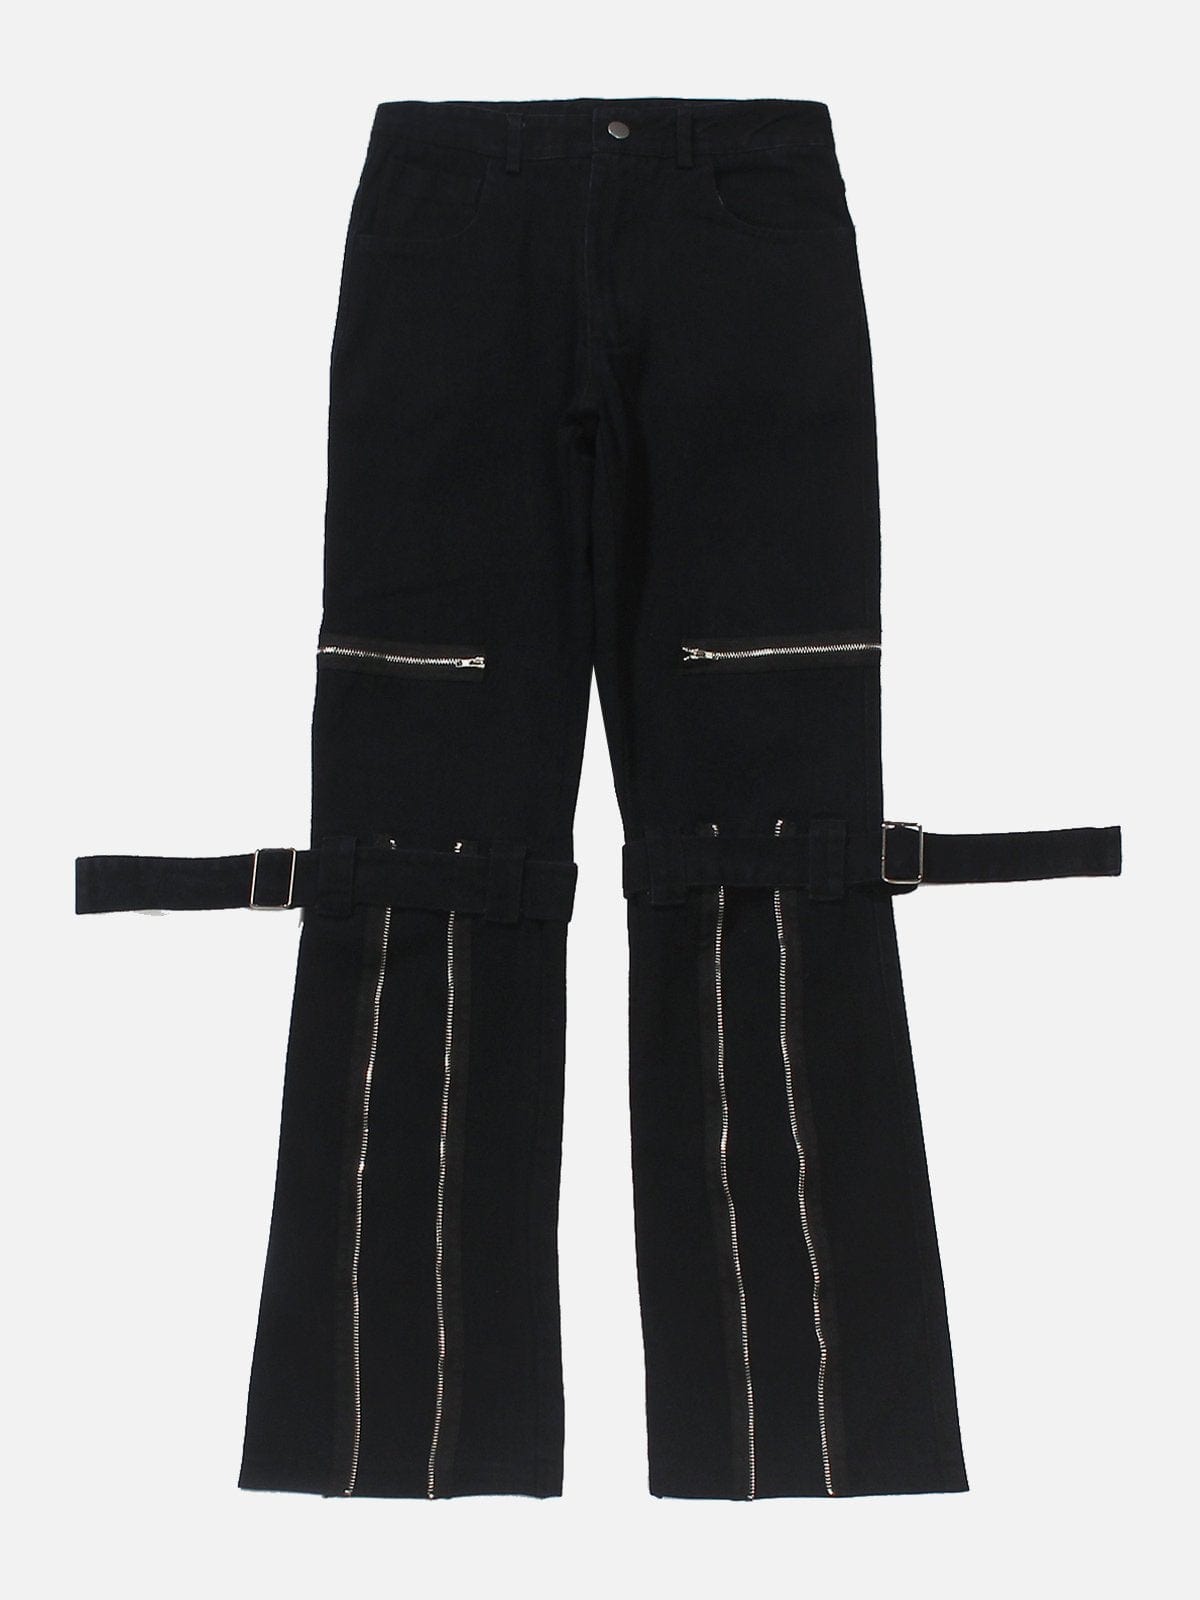 NEV Ribbon Multi-Zip Pants